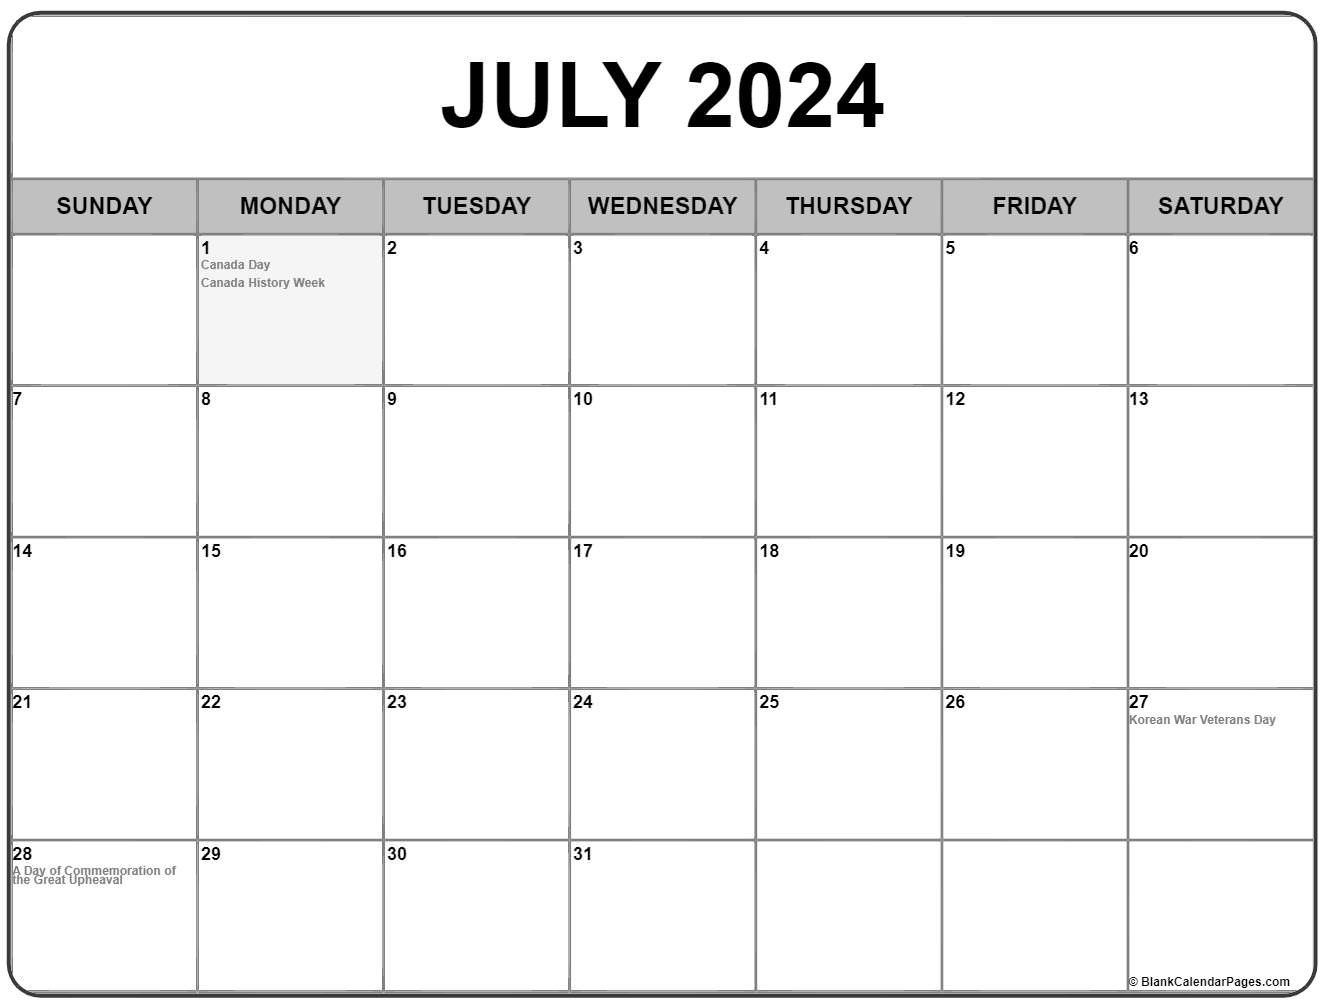 July 2021 Calendar With Holidays Canada | Calendar Page